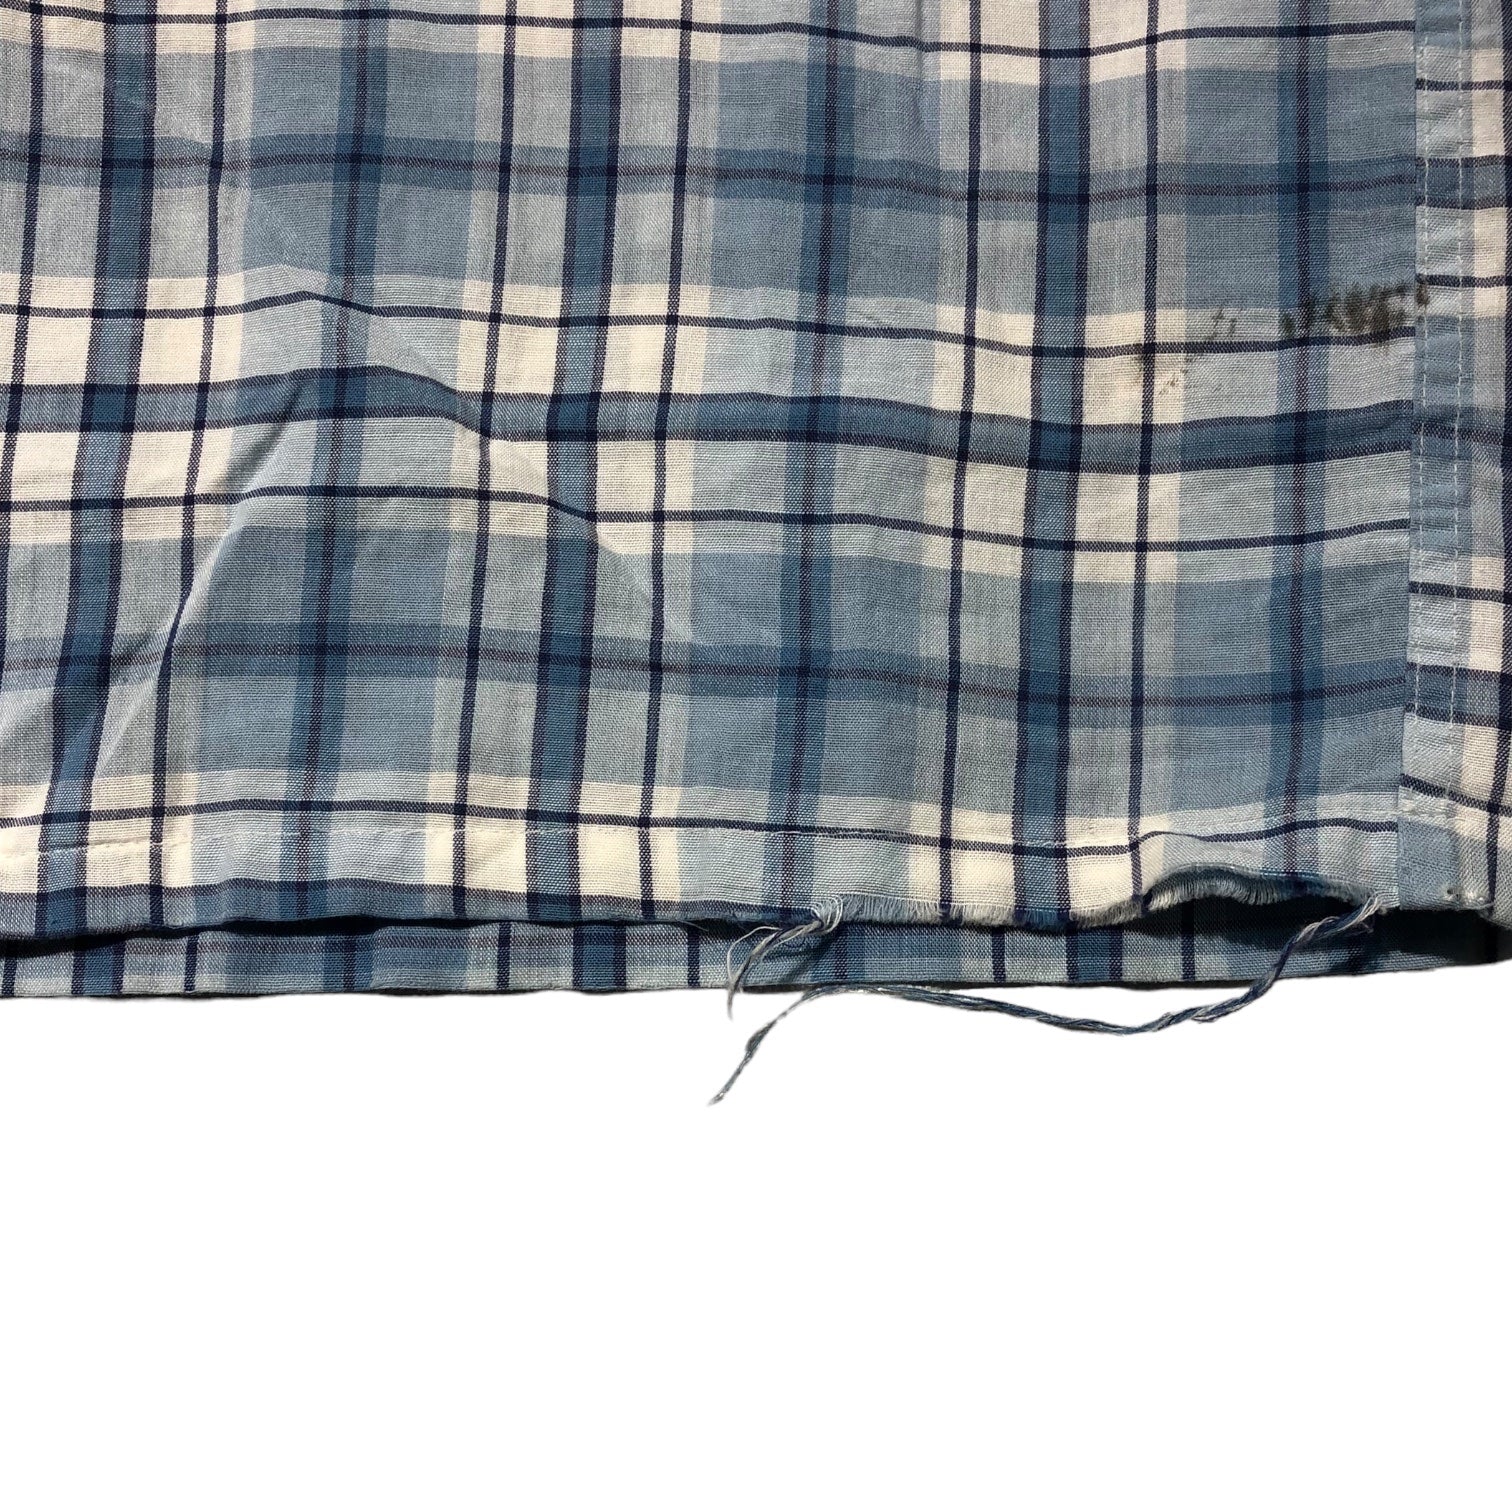 TOWNCRAFT(タウンクラフト) 60's vintage open collar shirt ヴィンテージ オープンカラー シャツ 半袖 チェック S ブルー PENNY'S　船タグ